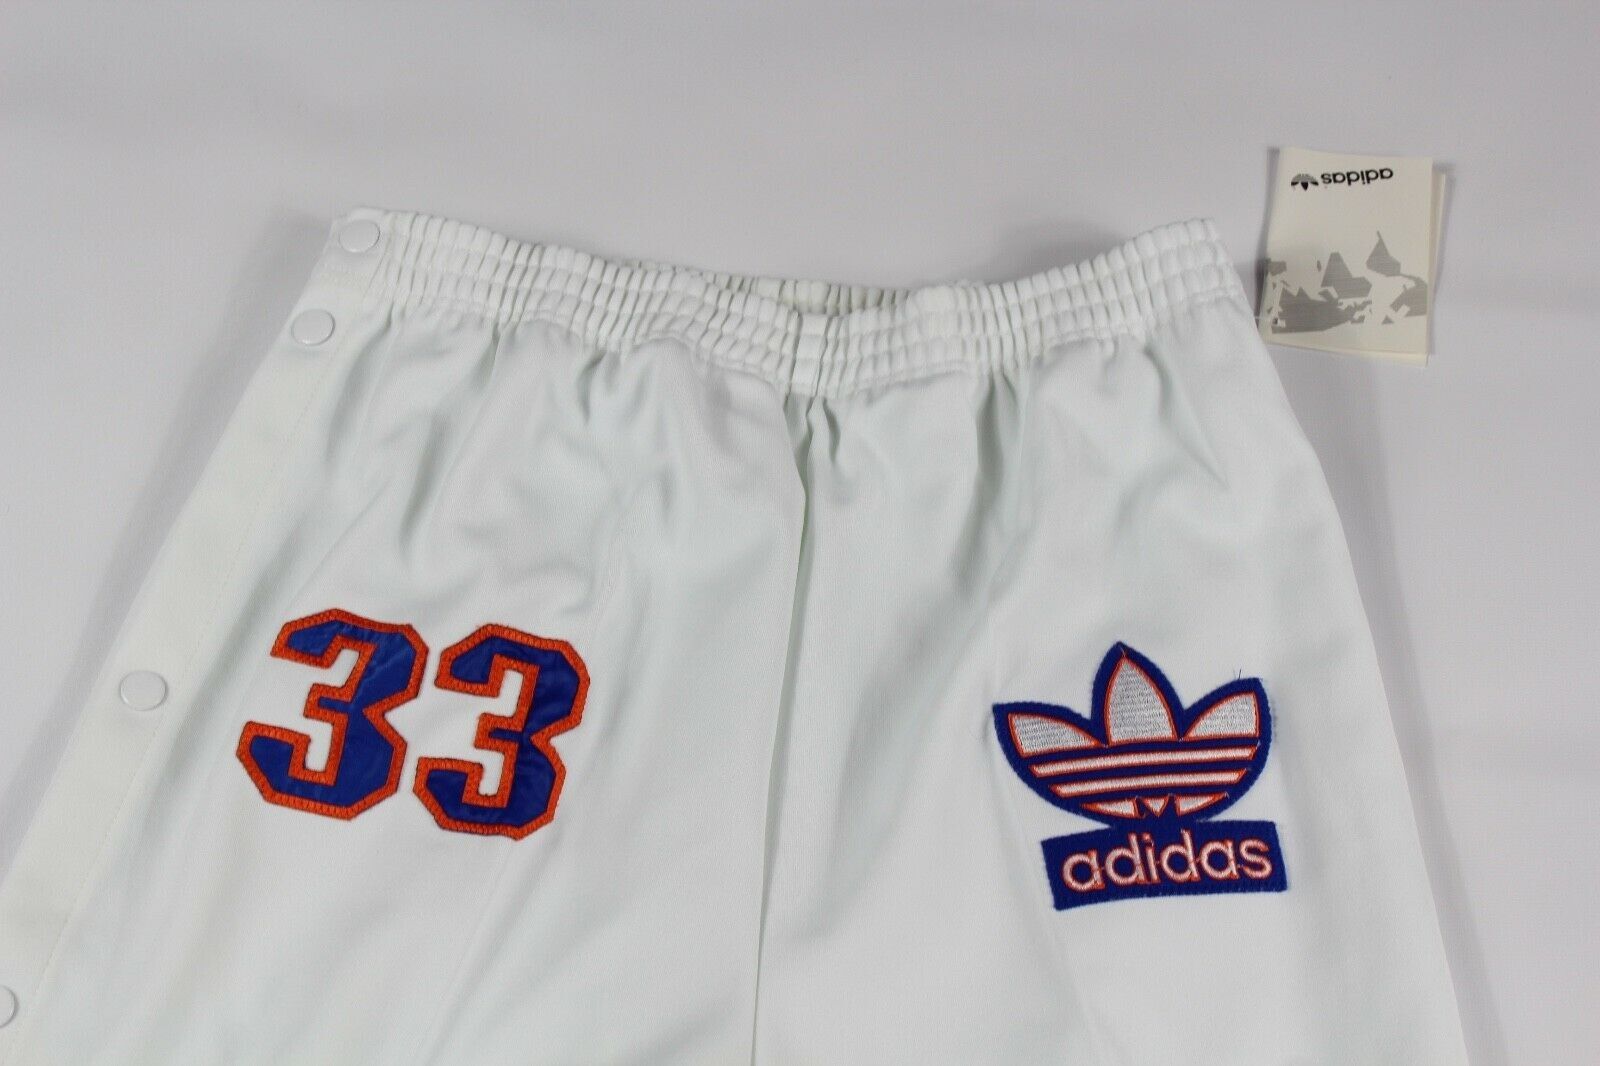 Adidas New Vintage 80s Adidas Mens Large Patrick Ewing New York Knicks Tearaway Pants Size US 34 / EU 50 - 2 Preview